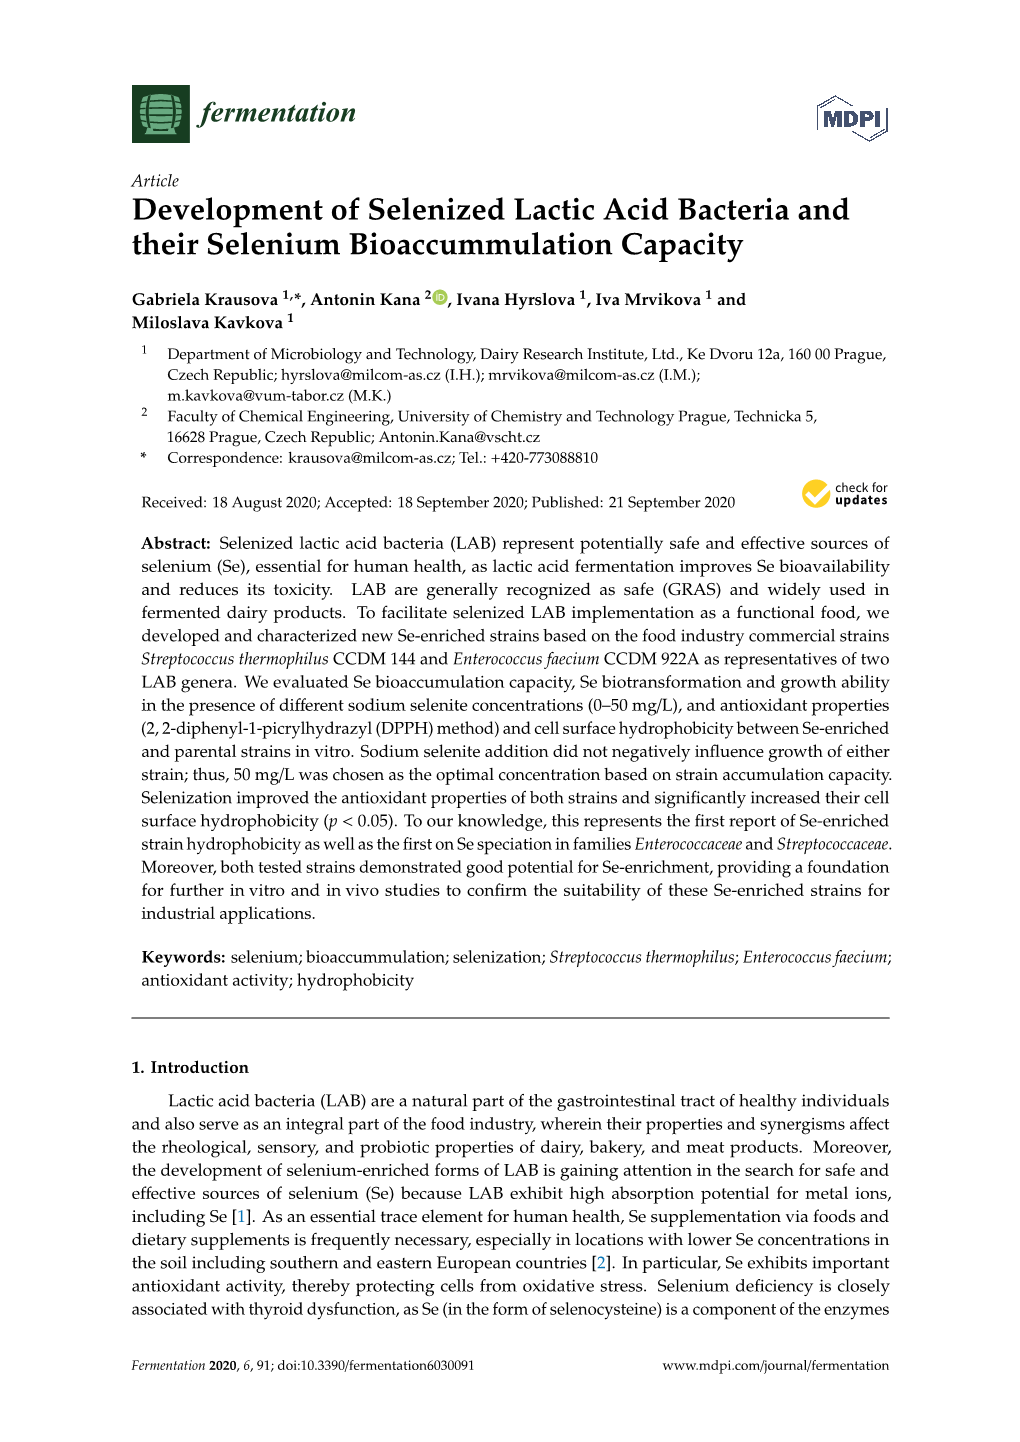 Development of Selenized Lactic Acid Bacteria and Their Selenium Bioaccummulation Capacity